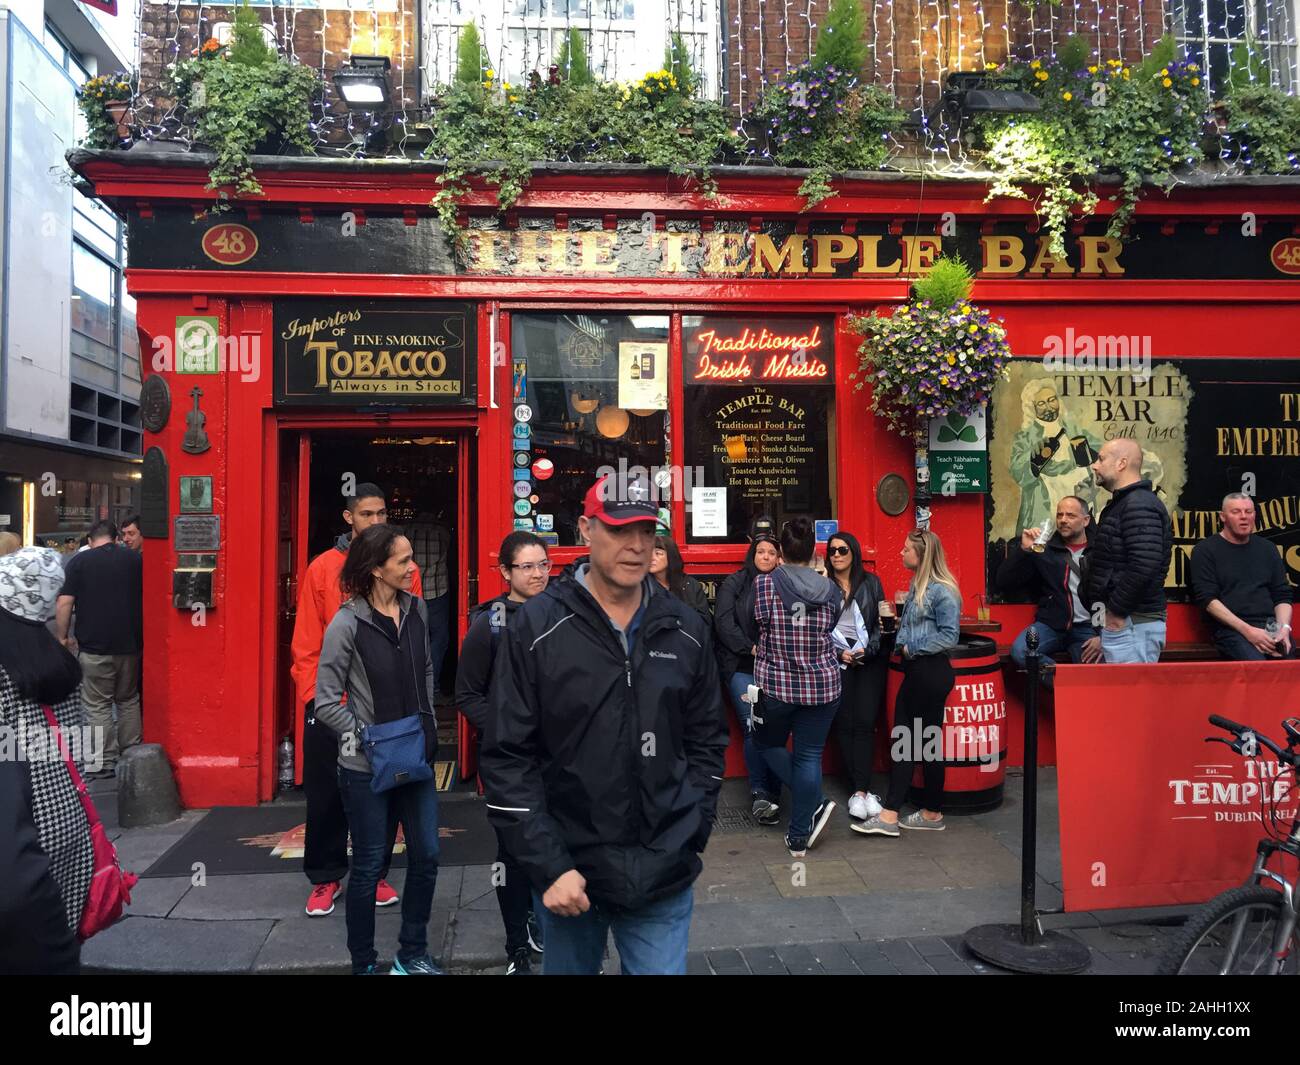 Dublin/Ireland - May 15, 2019: The Temple Bar is a popular tourist destination in Temple Bar region of Dublin. Stock Photo